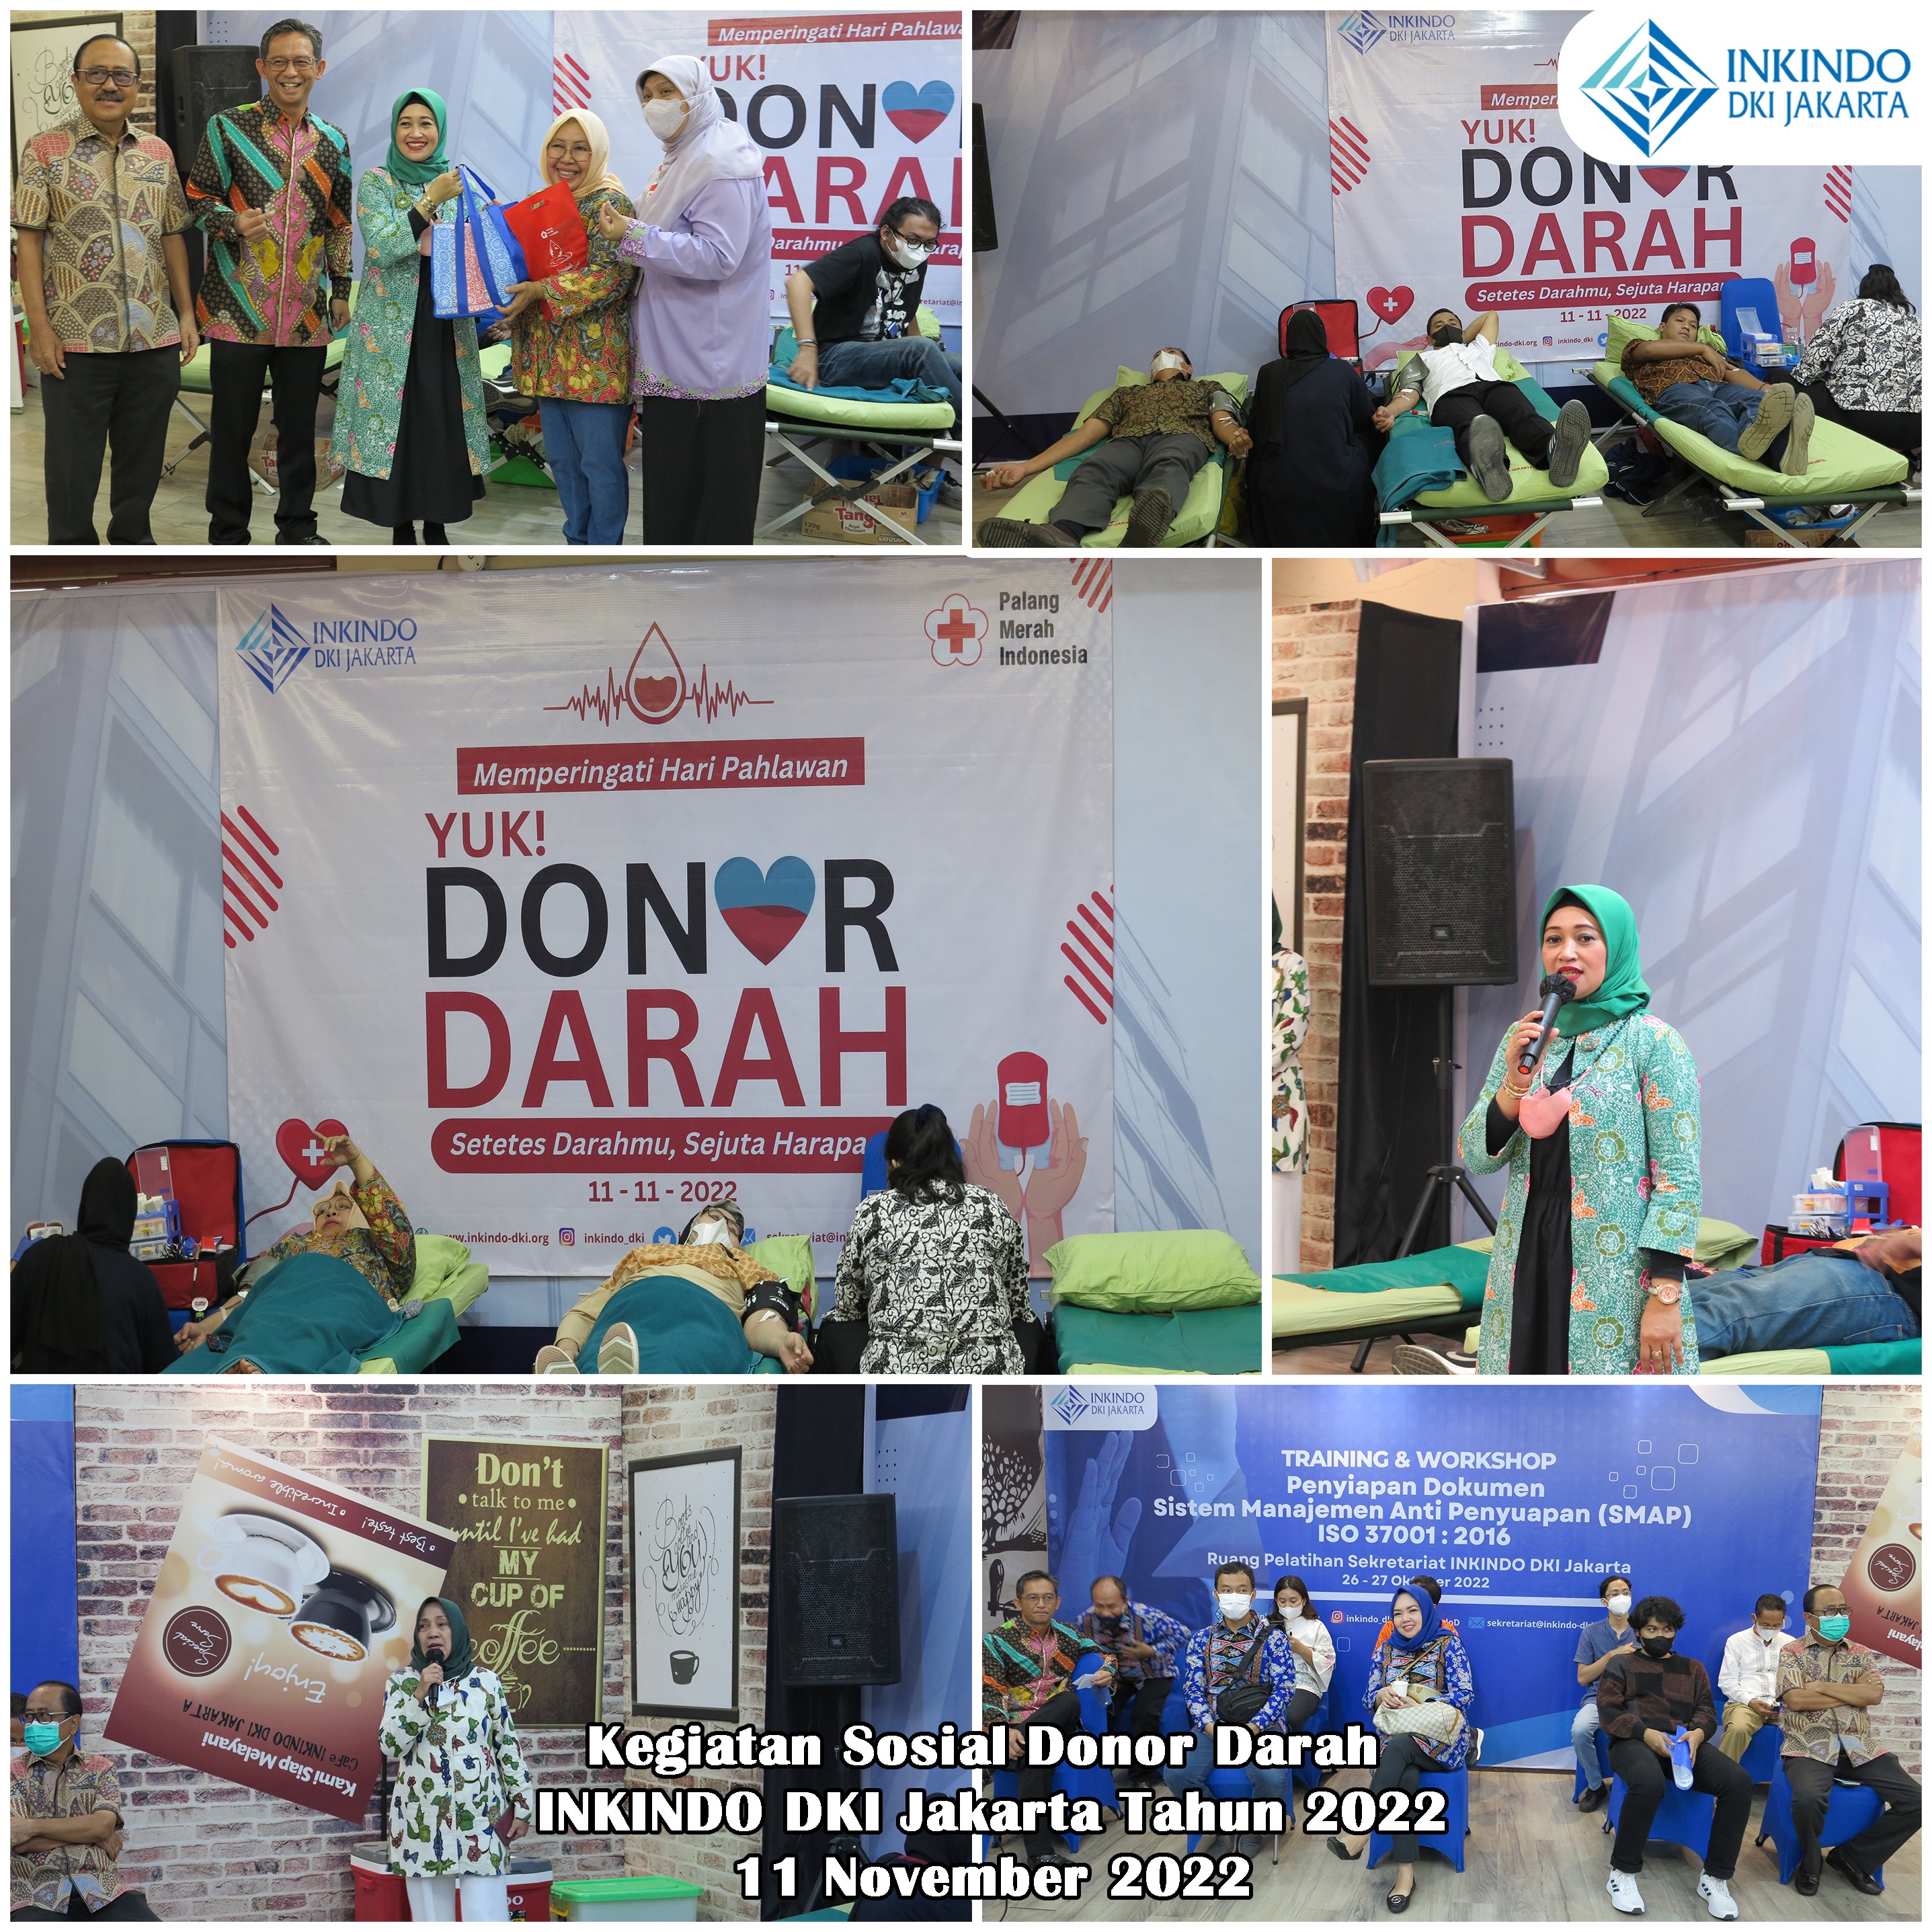 INKINDO DKI Jakarta Selenggarakan Donor Darah